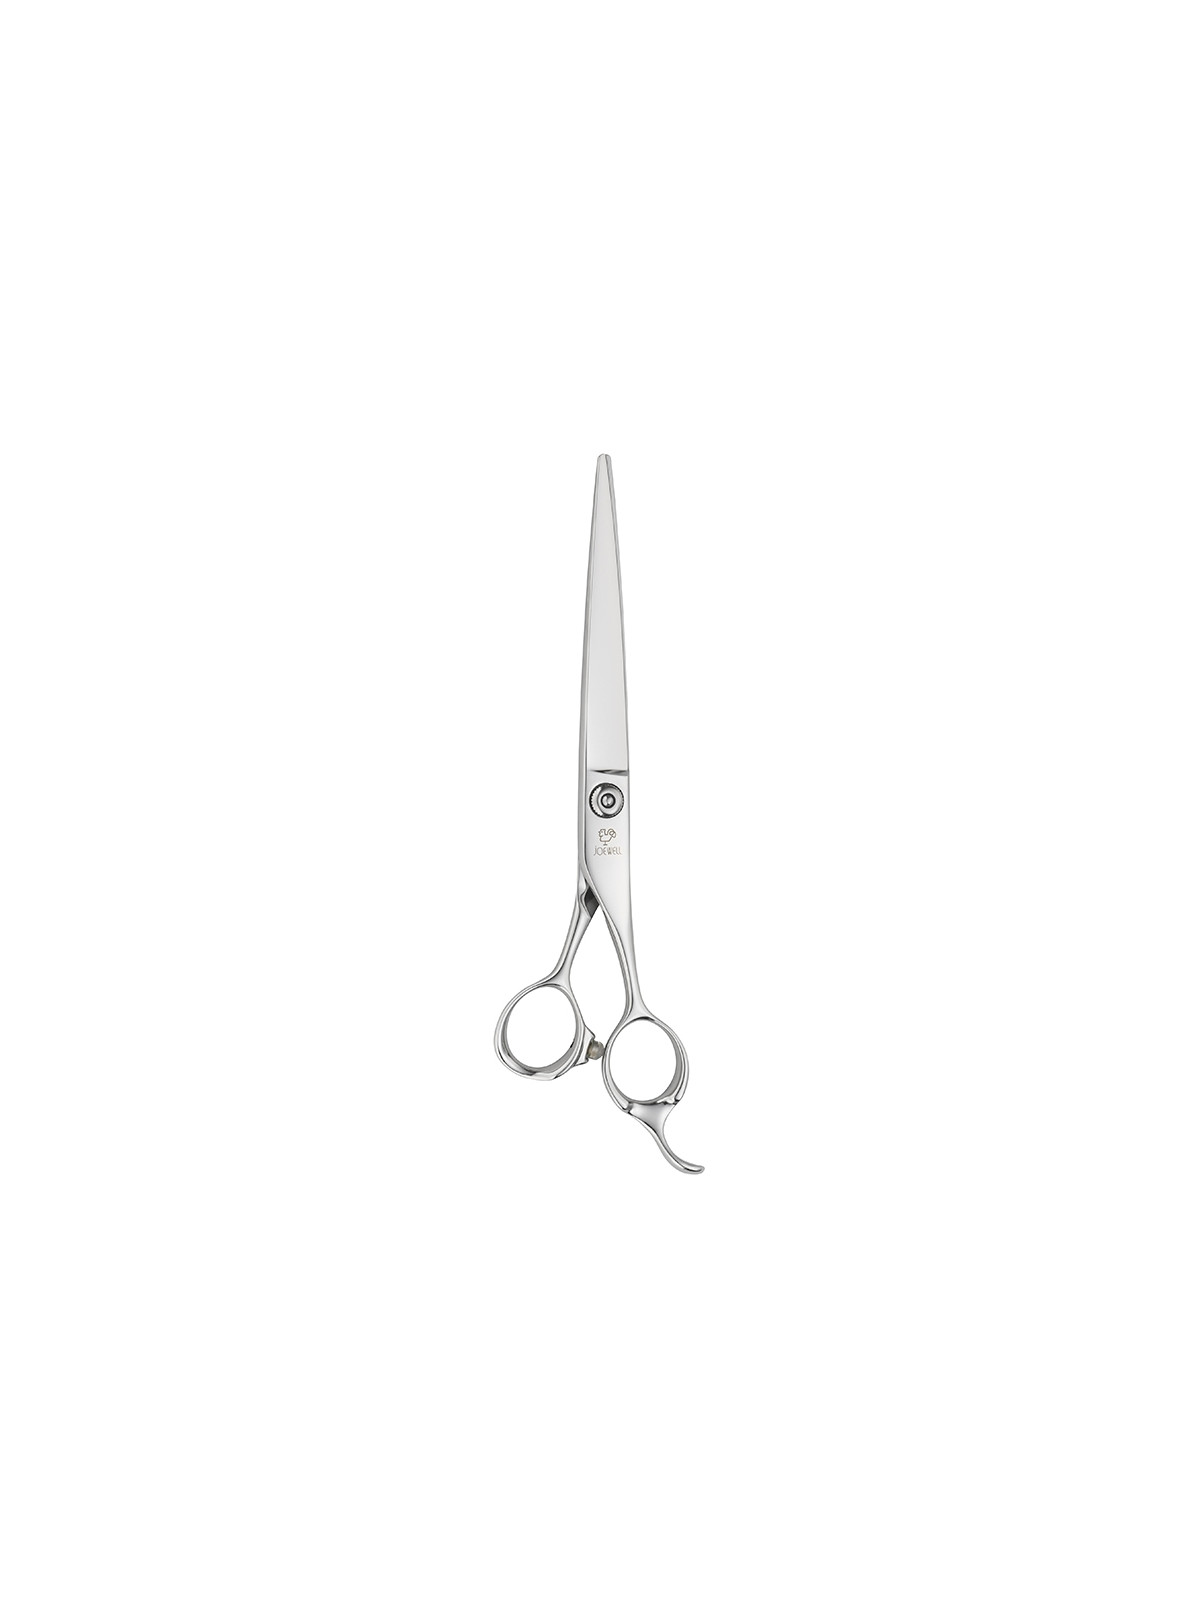 Joewell FZ70 long cutting scissors